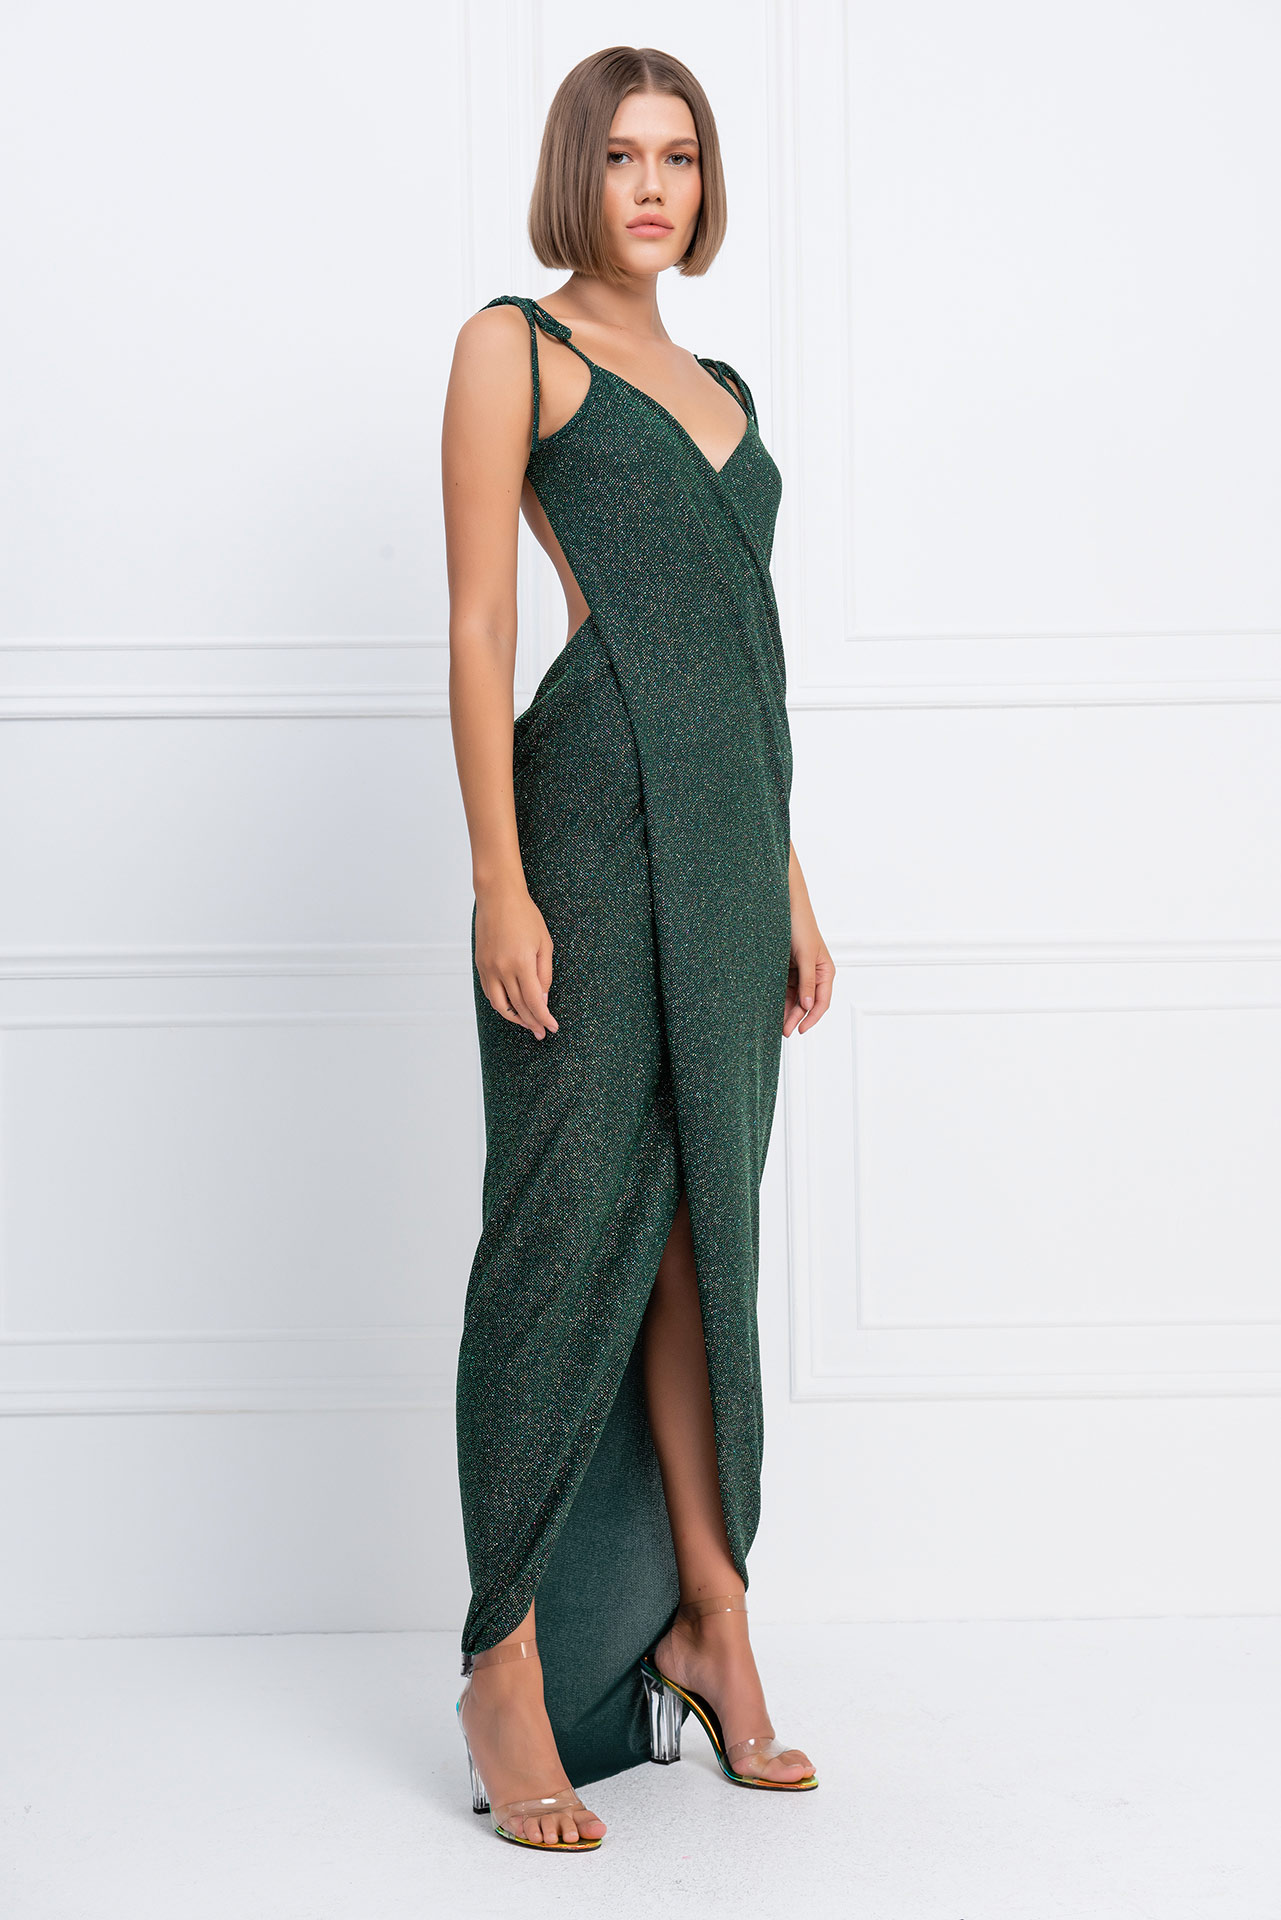 Wholesale Glittery Dark Green Crossover Cami Dress